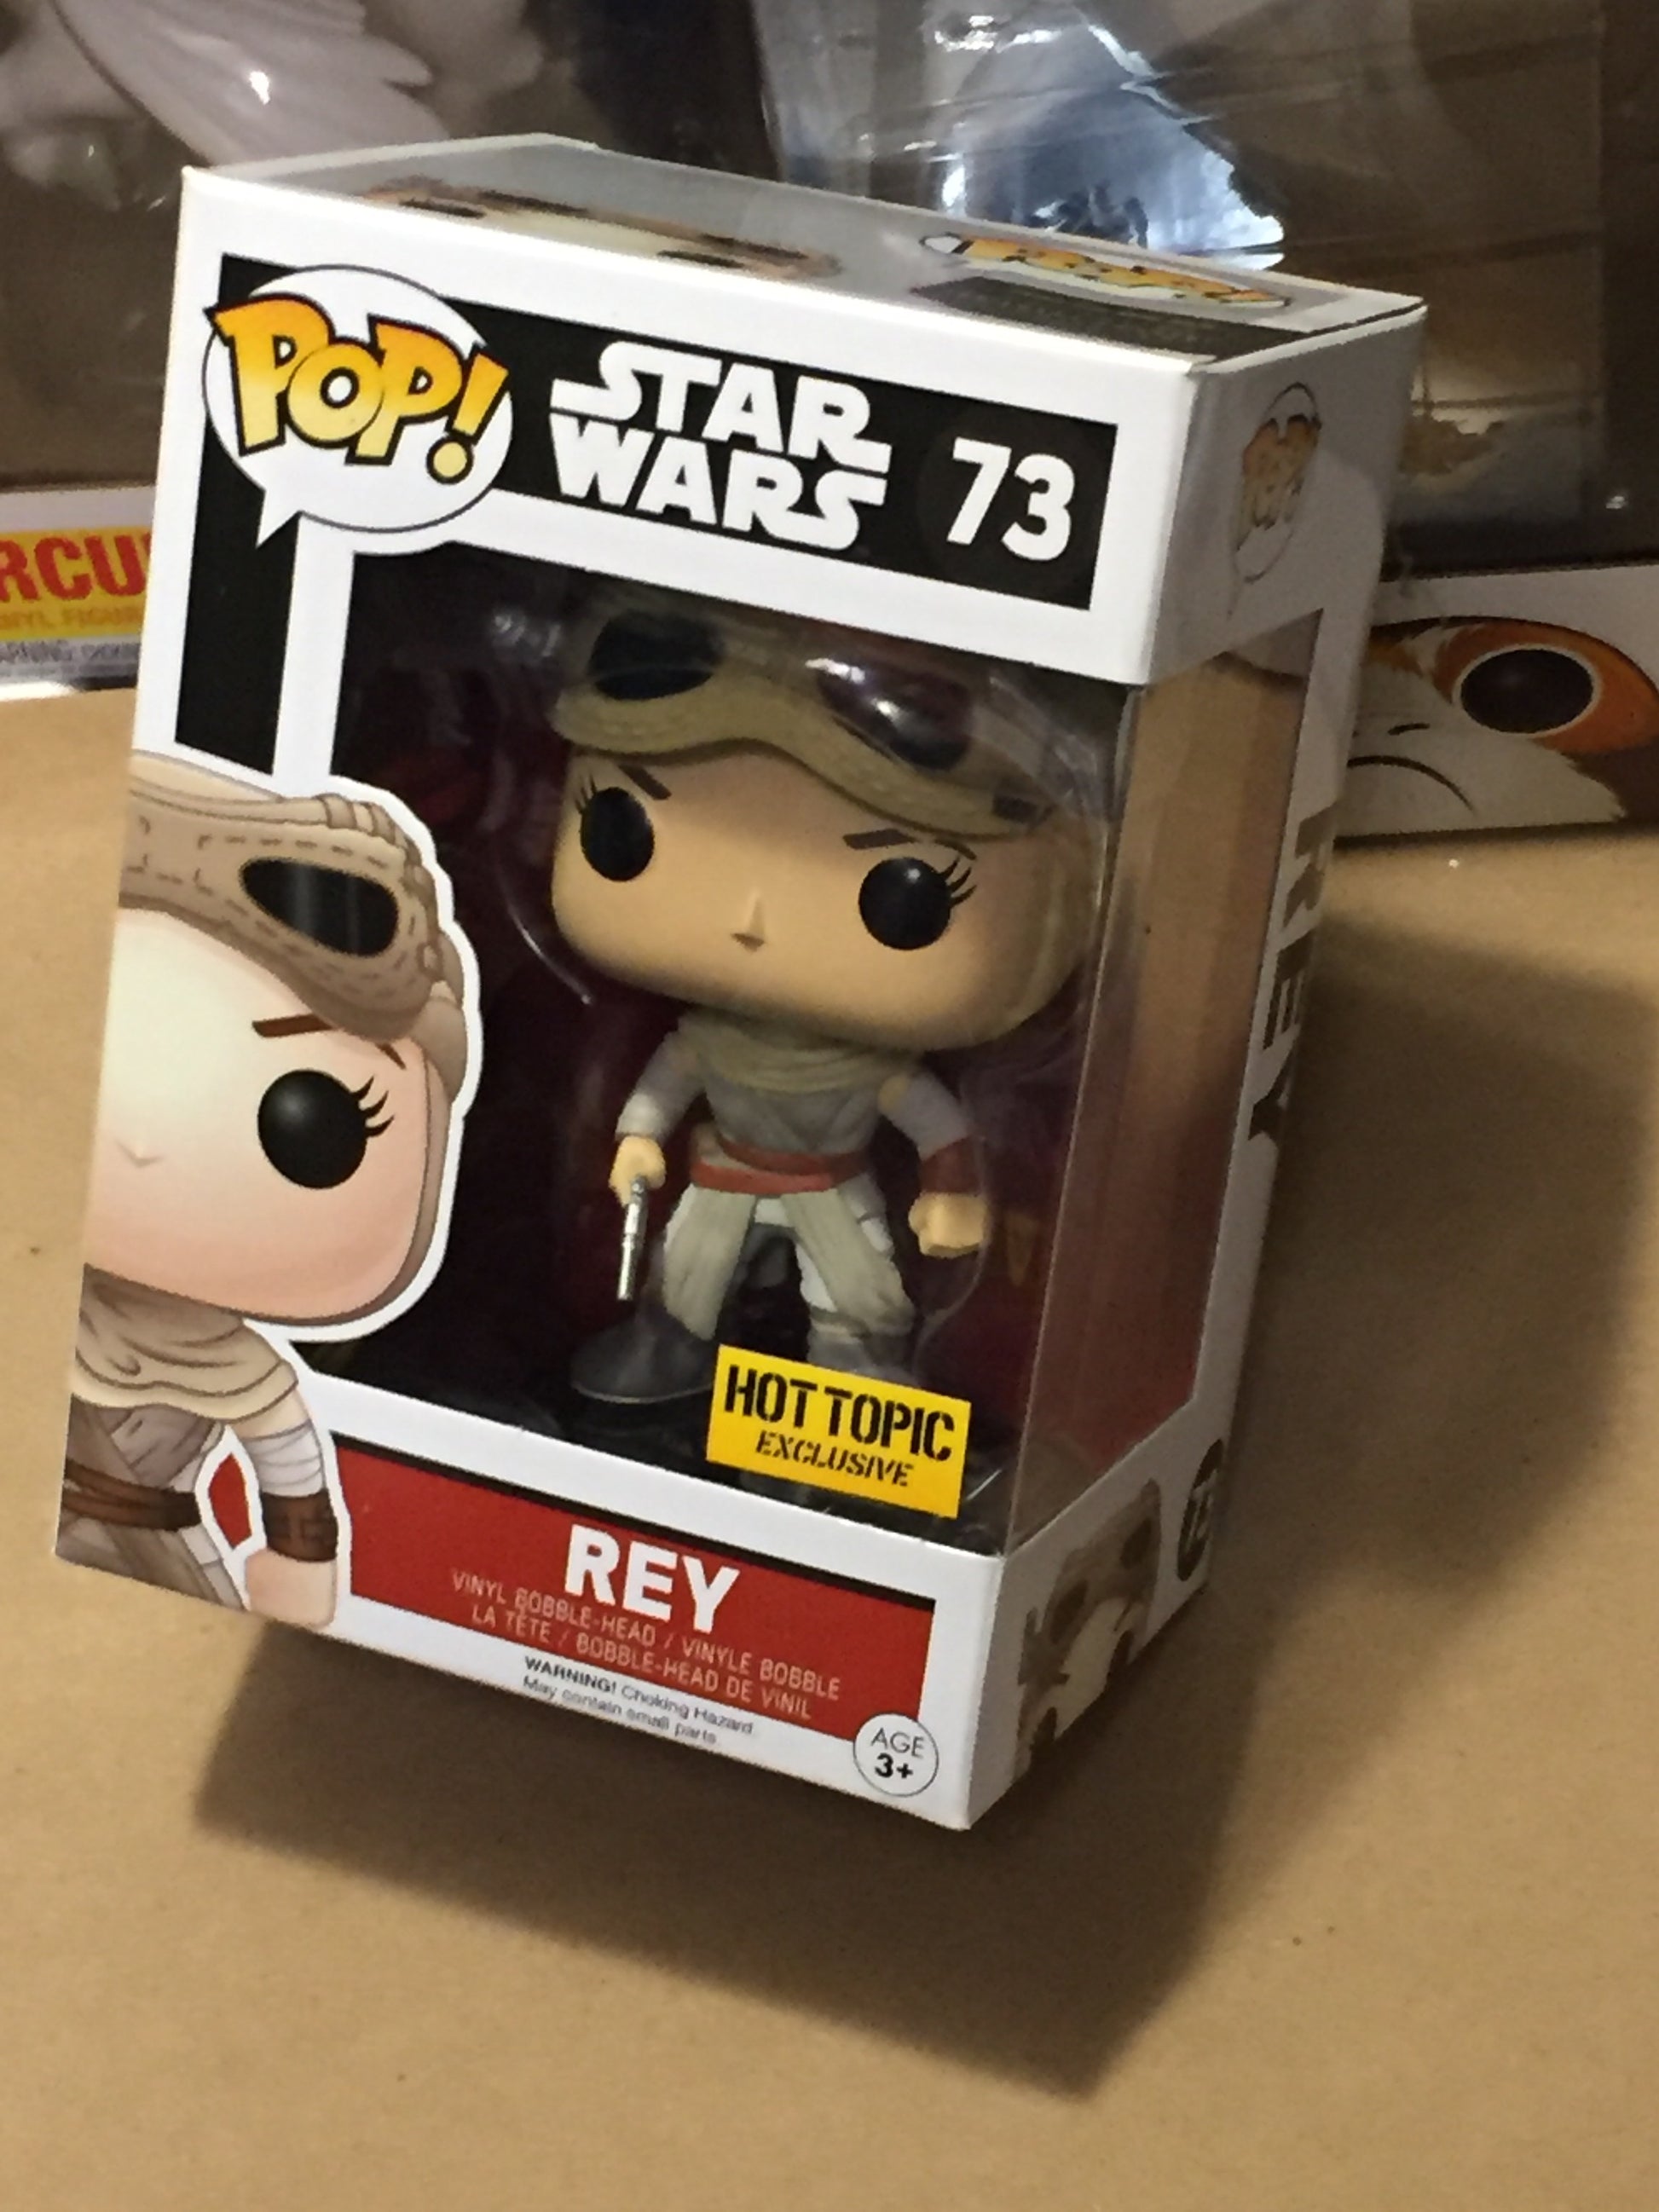 Star Wars - Rey - Funko POP! 